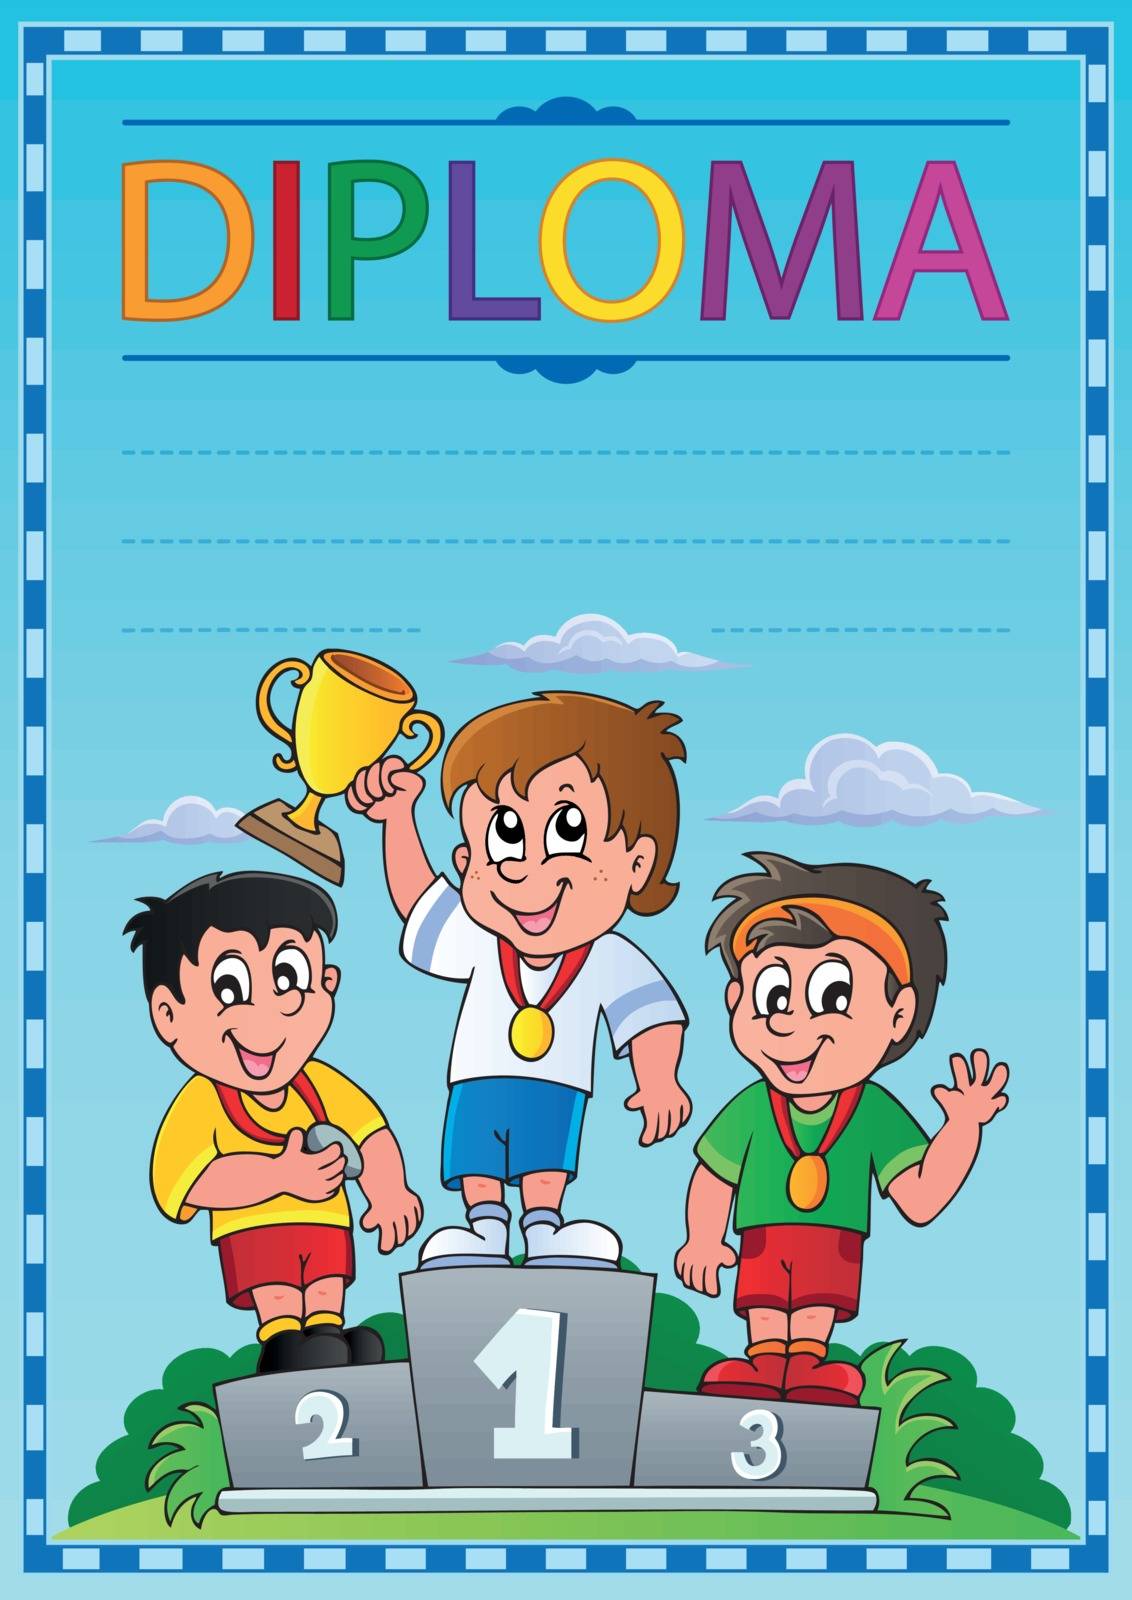 Diploma topic image 3 - eps10 vector illustration.